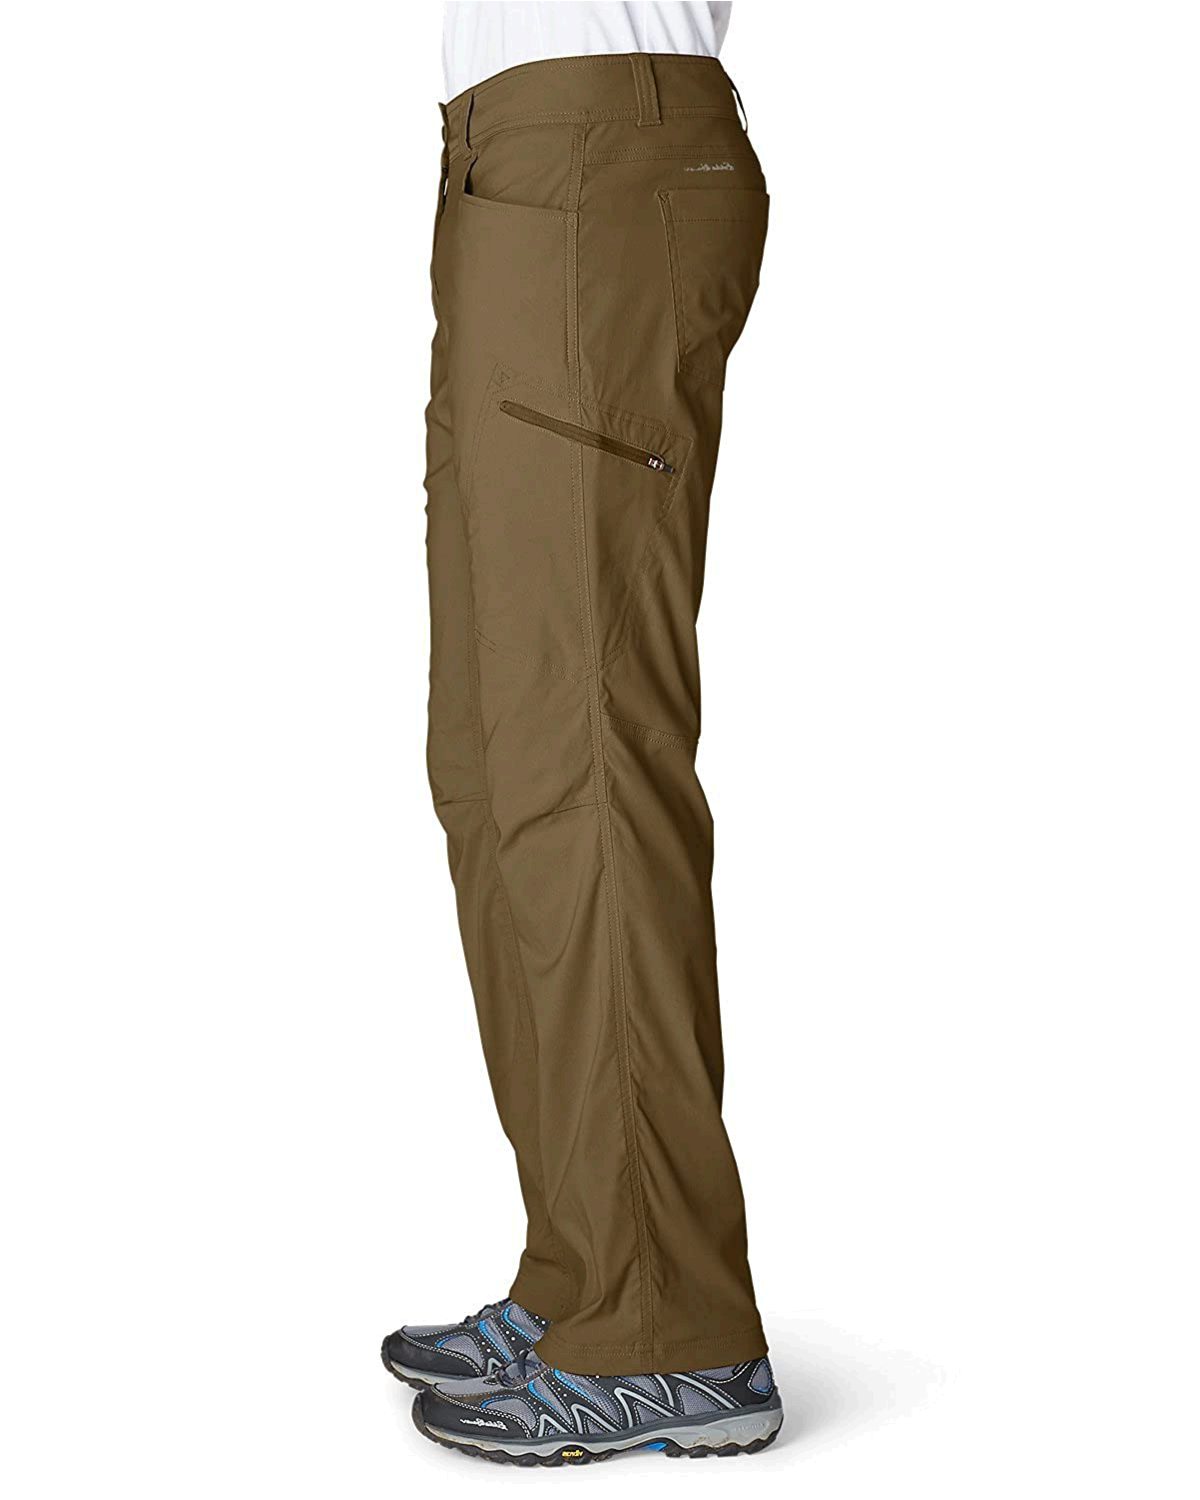 Eddie Bauer Men's Guide Pro Lined Pants, Dk Smoke Regular, Grey, Size 34W x 32L | eBay